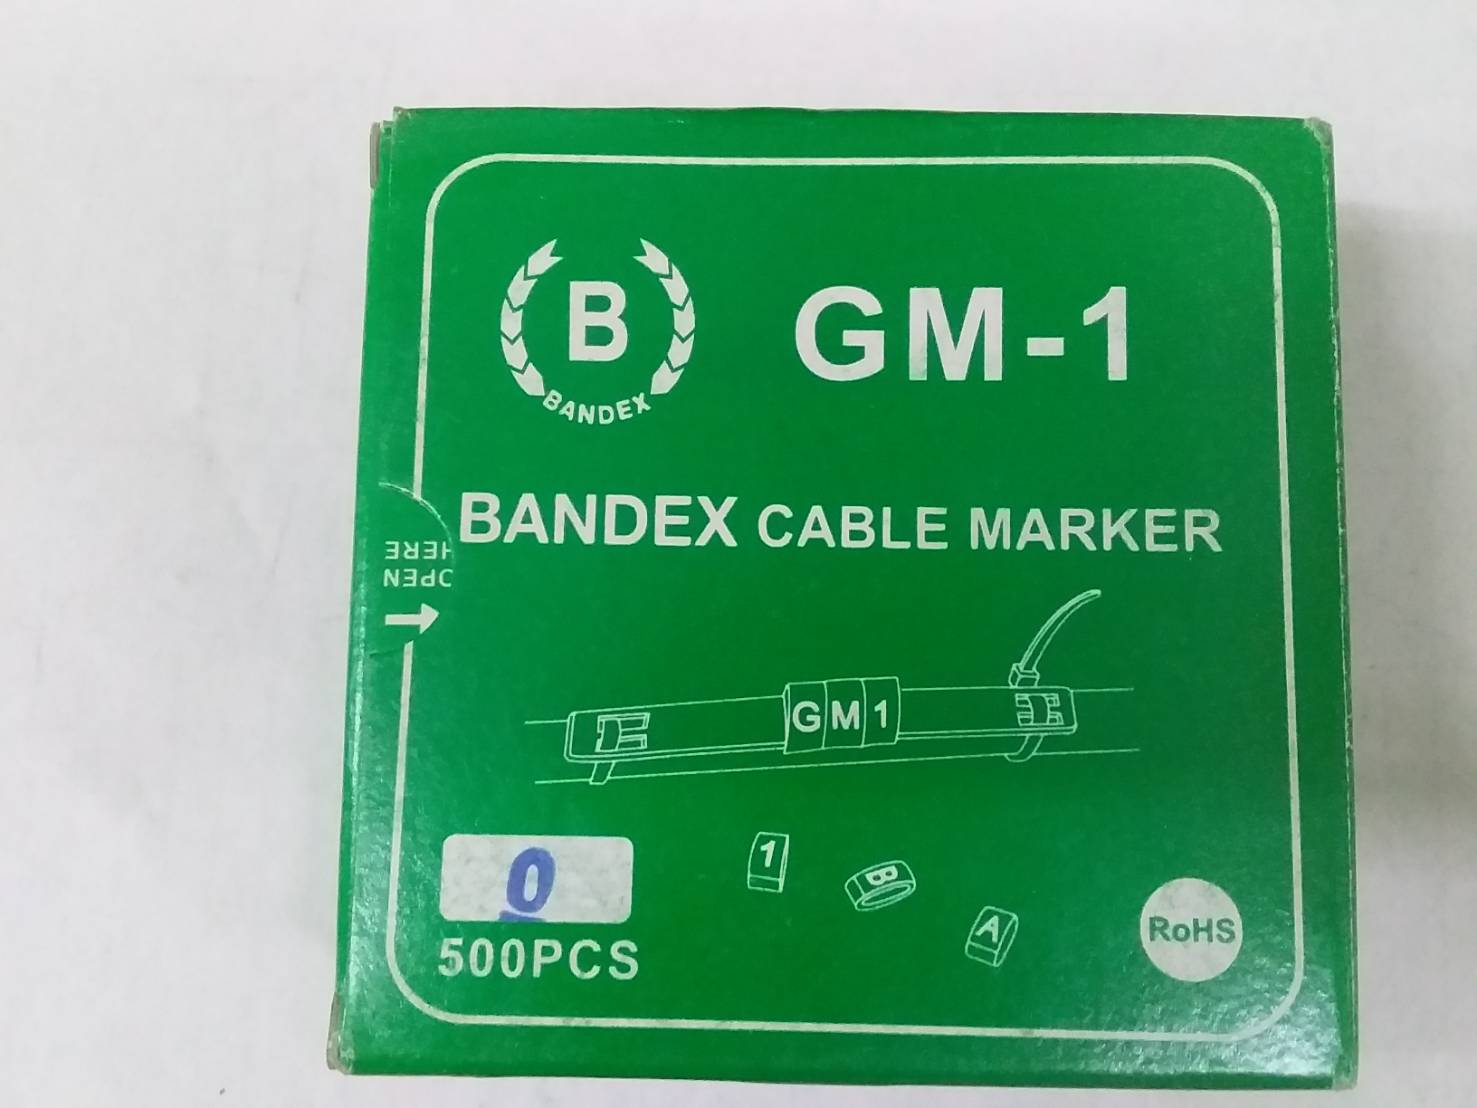 BANDEX CABLE MARKER GM-1 เลข0 ราคา 1 บาท